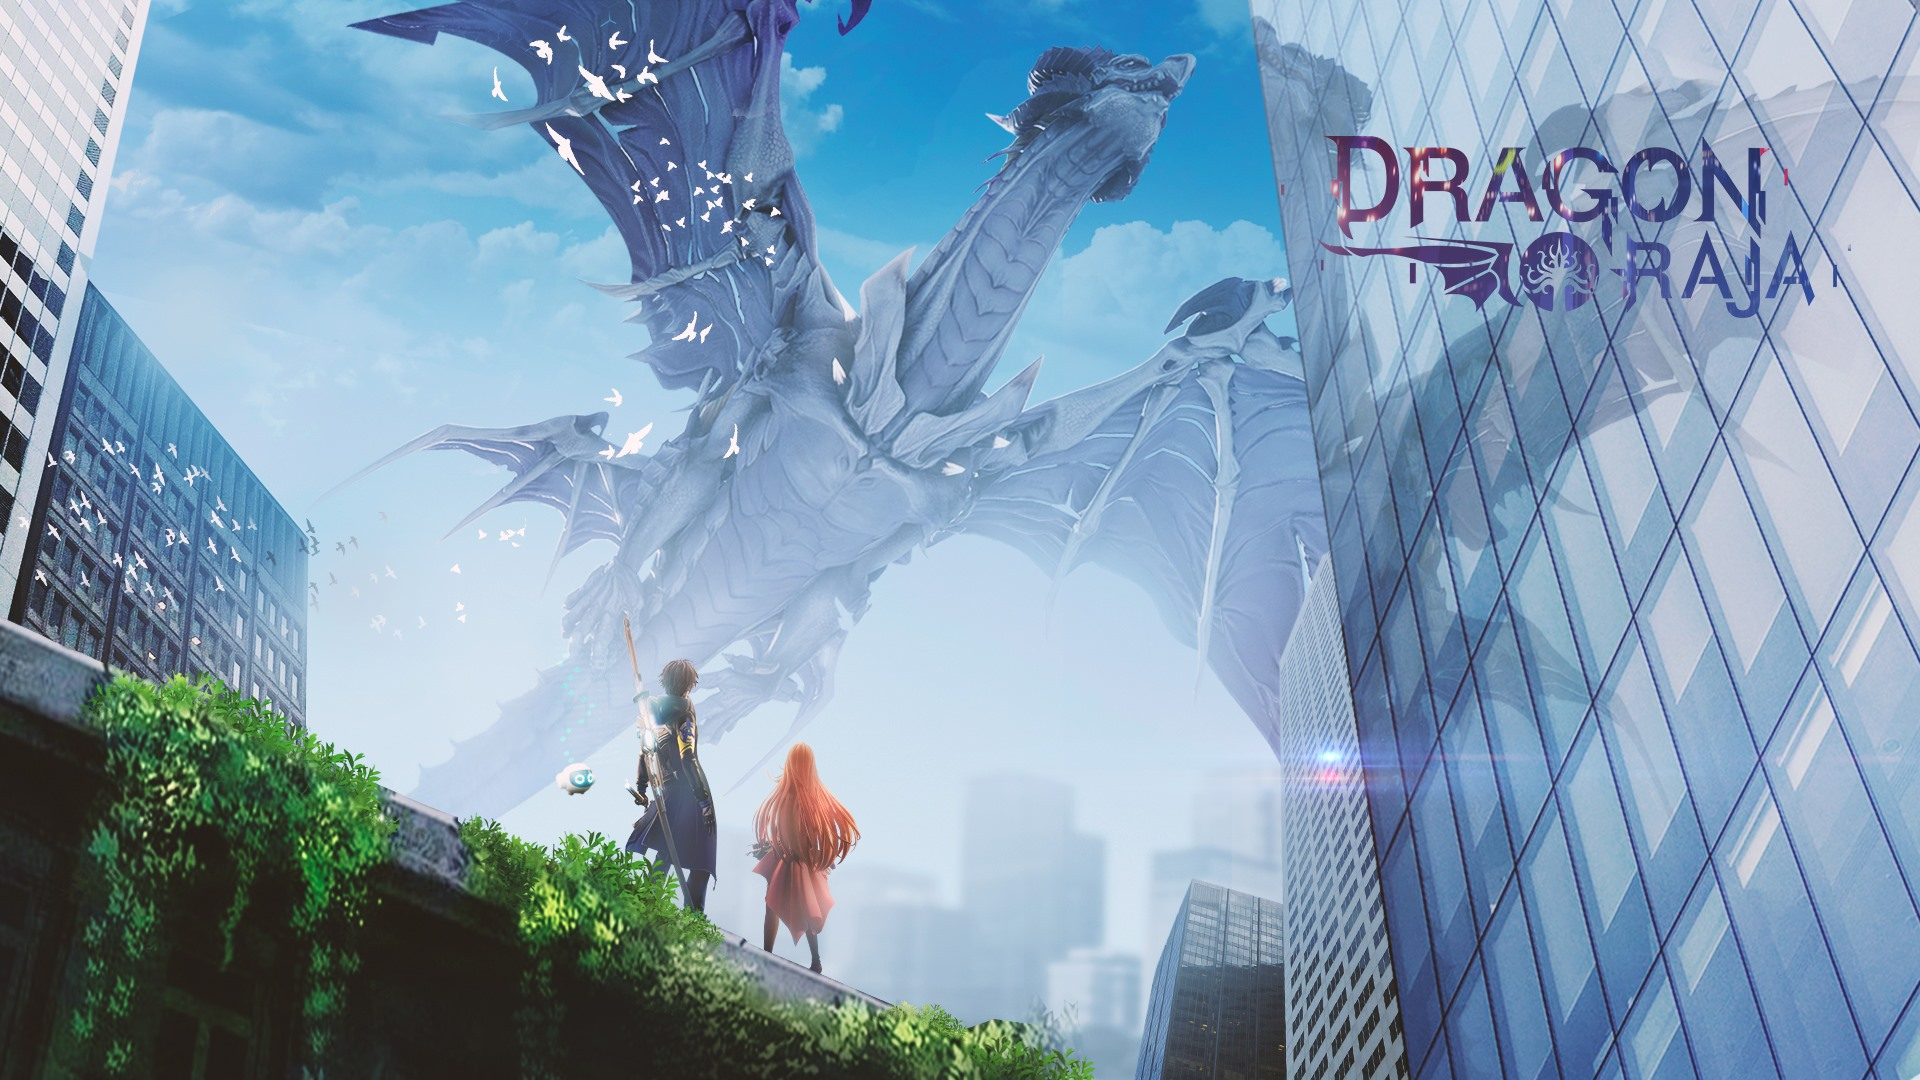 [$ 0.34] Dragon Raja - Enhance Pack DLC Digital Download CD Key